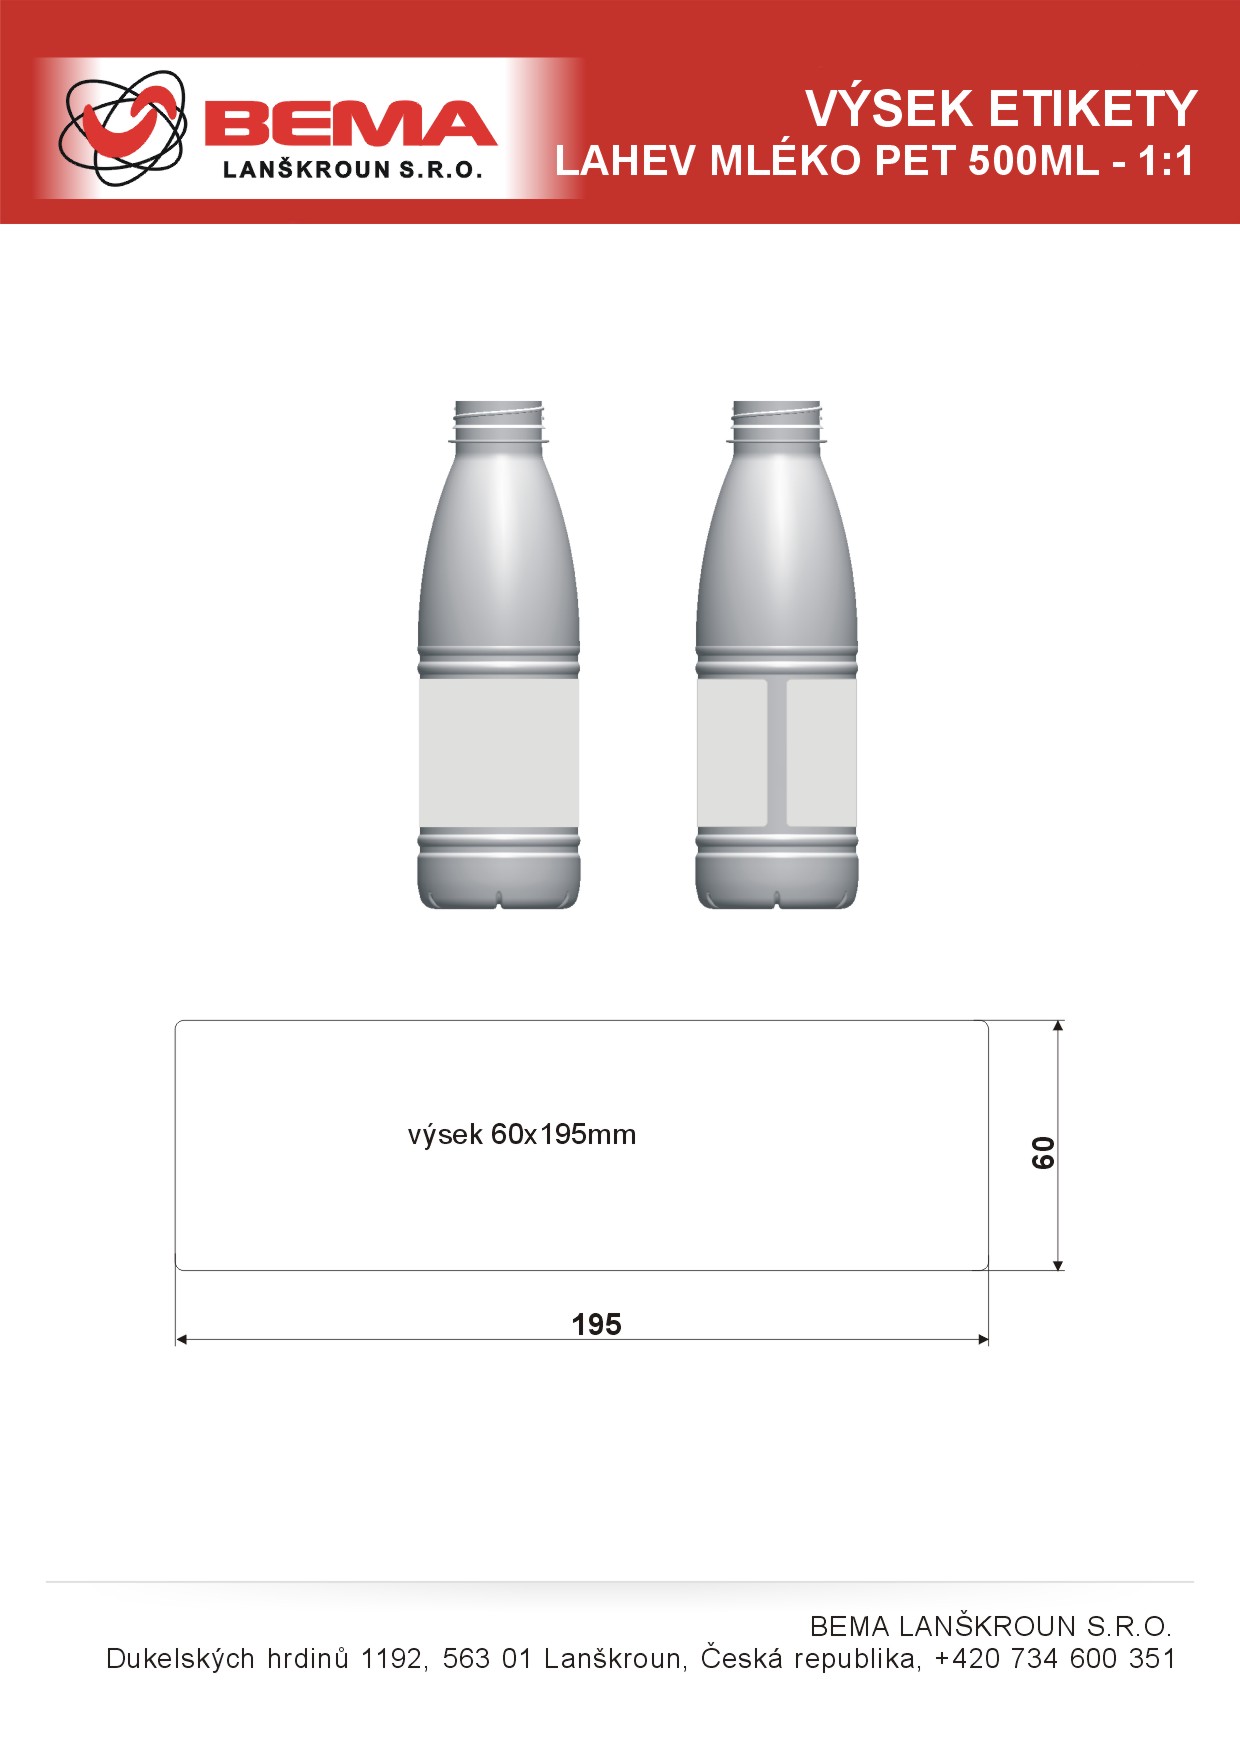 Vysek etikety lahev MLEKO PET 500ML- 23-5-2022